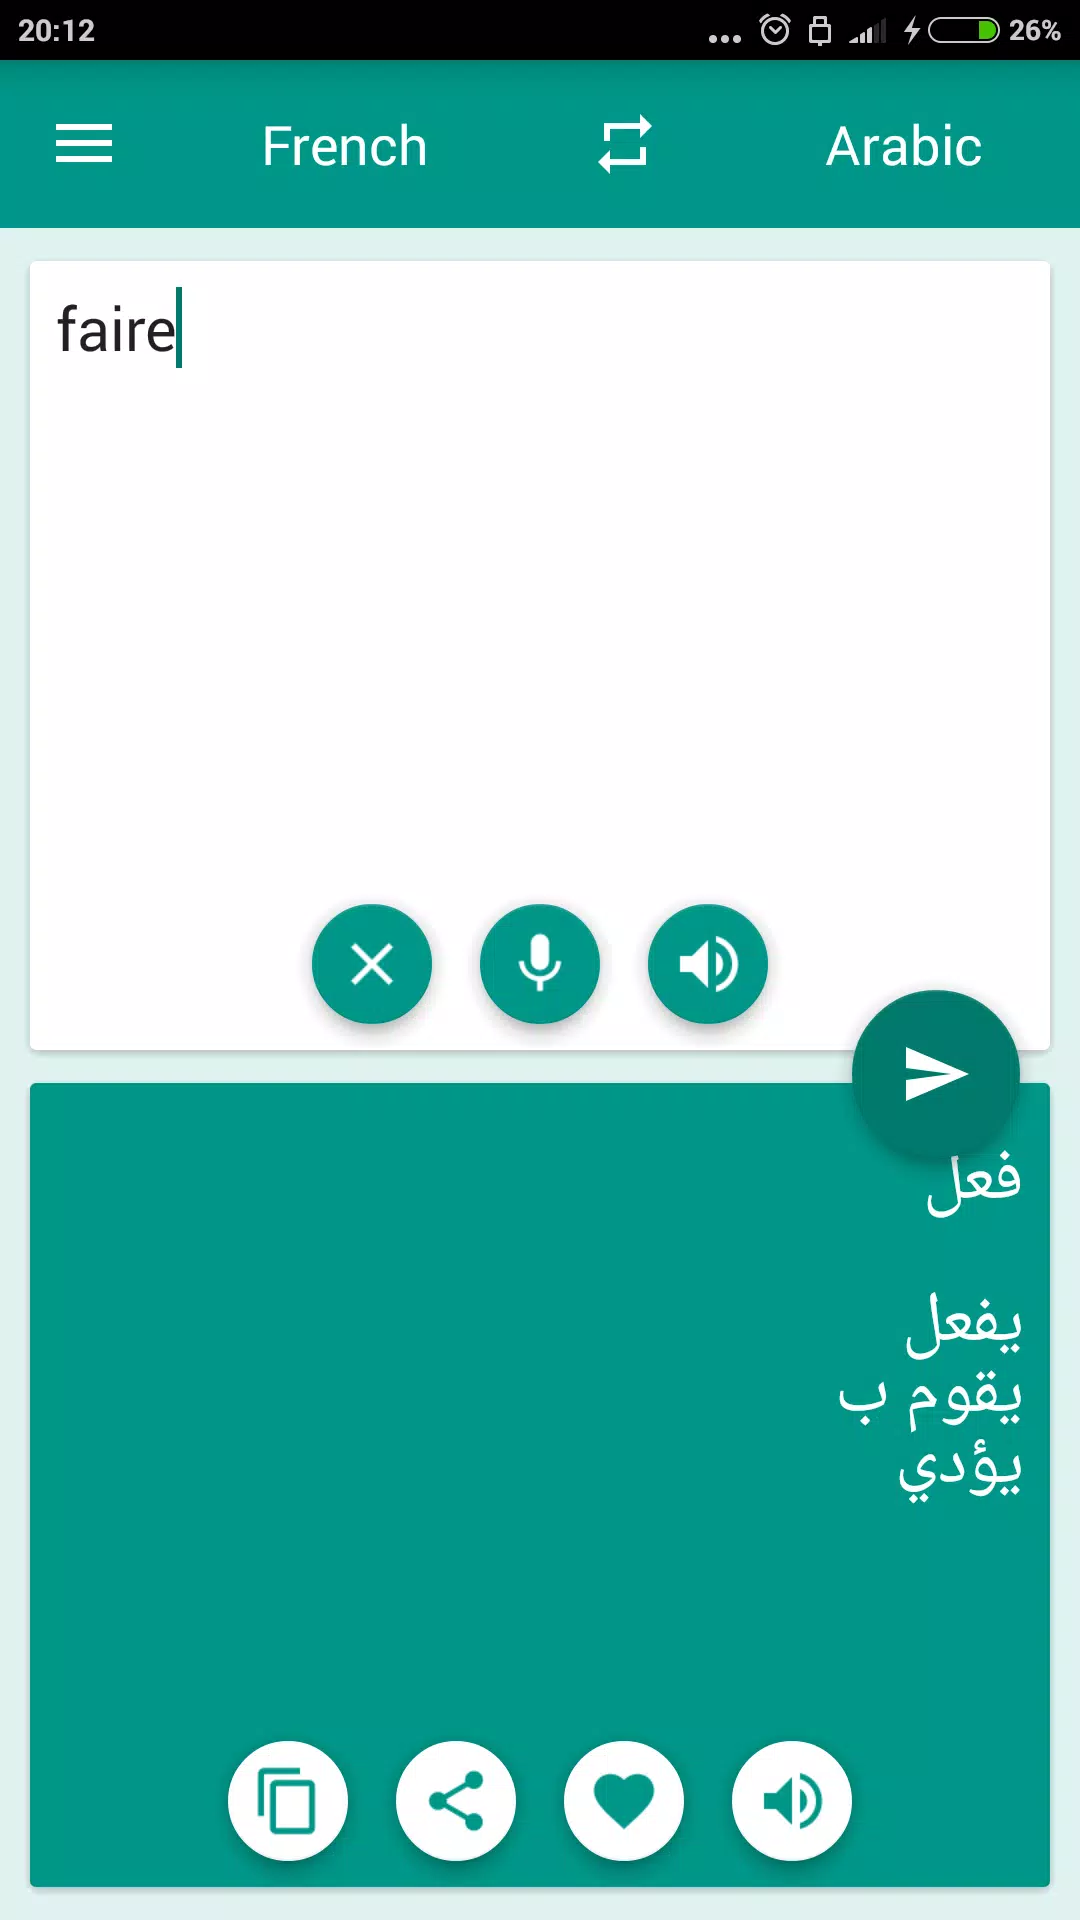 المترجم عربي-فرنسي for Android - APK Download